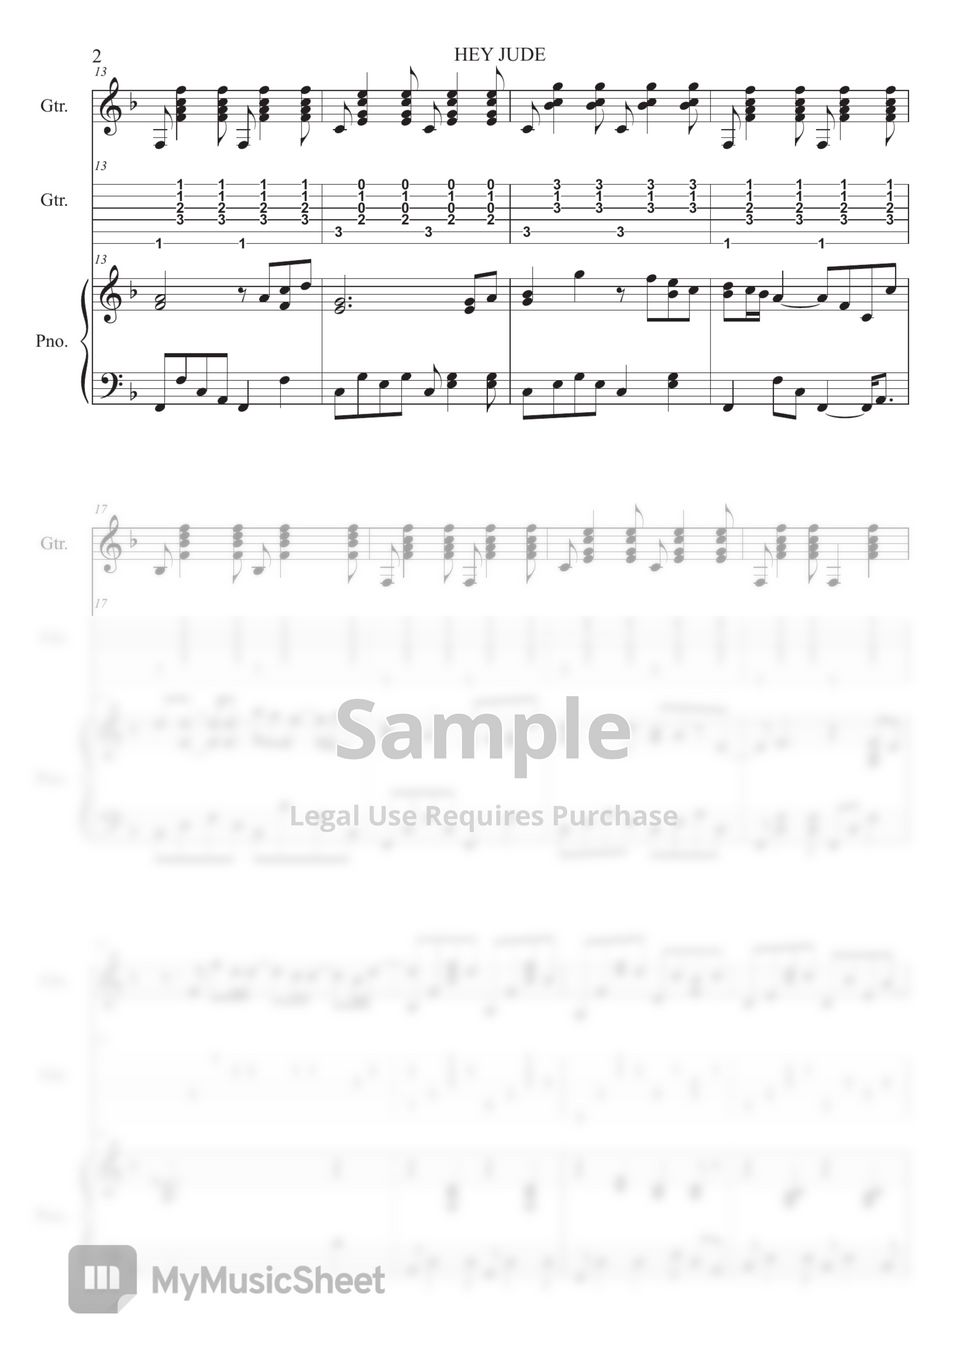 The Beatles - Hey Jude (Piano and Guitar Arrangement) by D.Petrova (Edora)